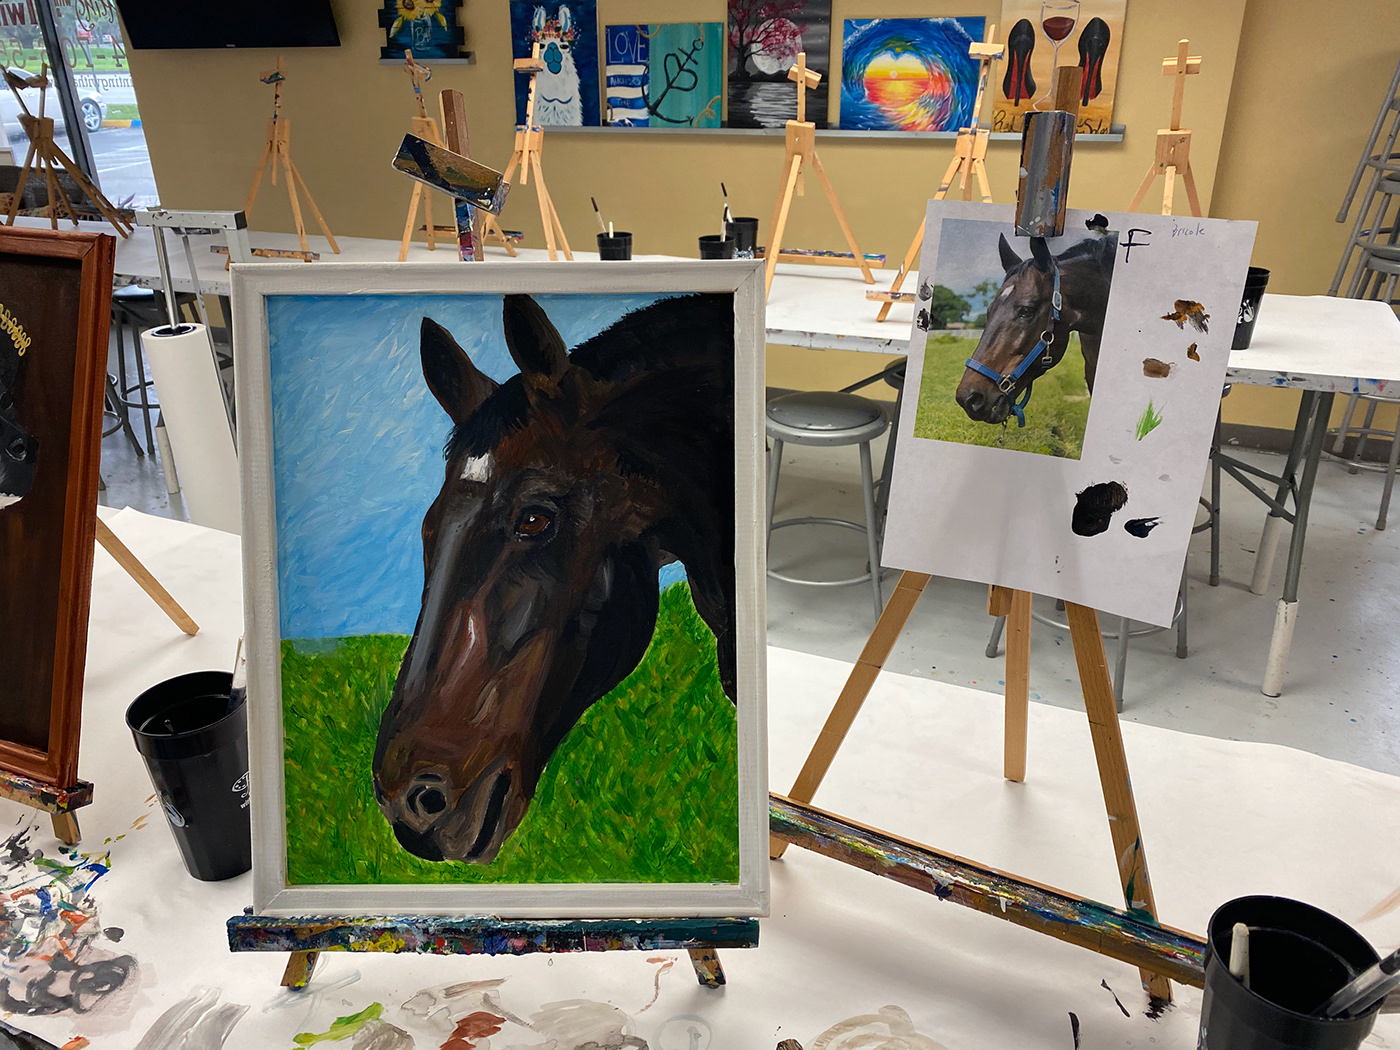 Bricole Reincke's realistic equestrian painting